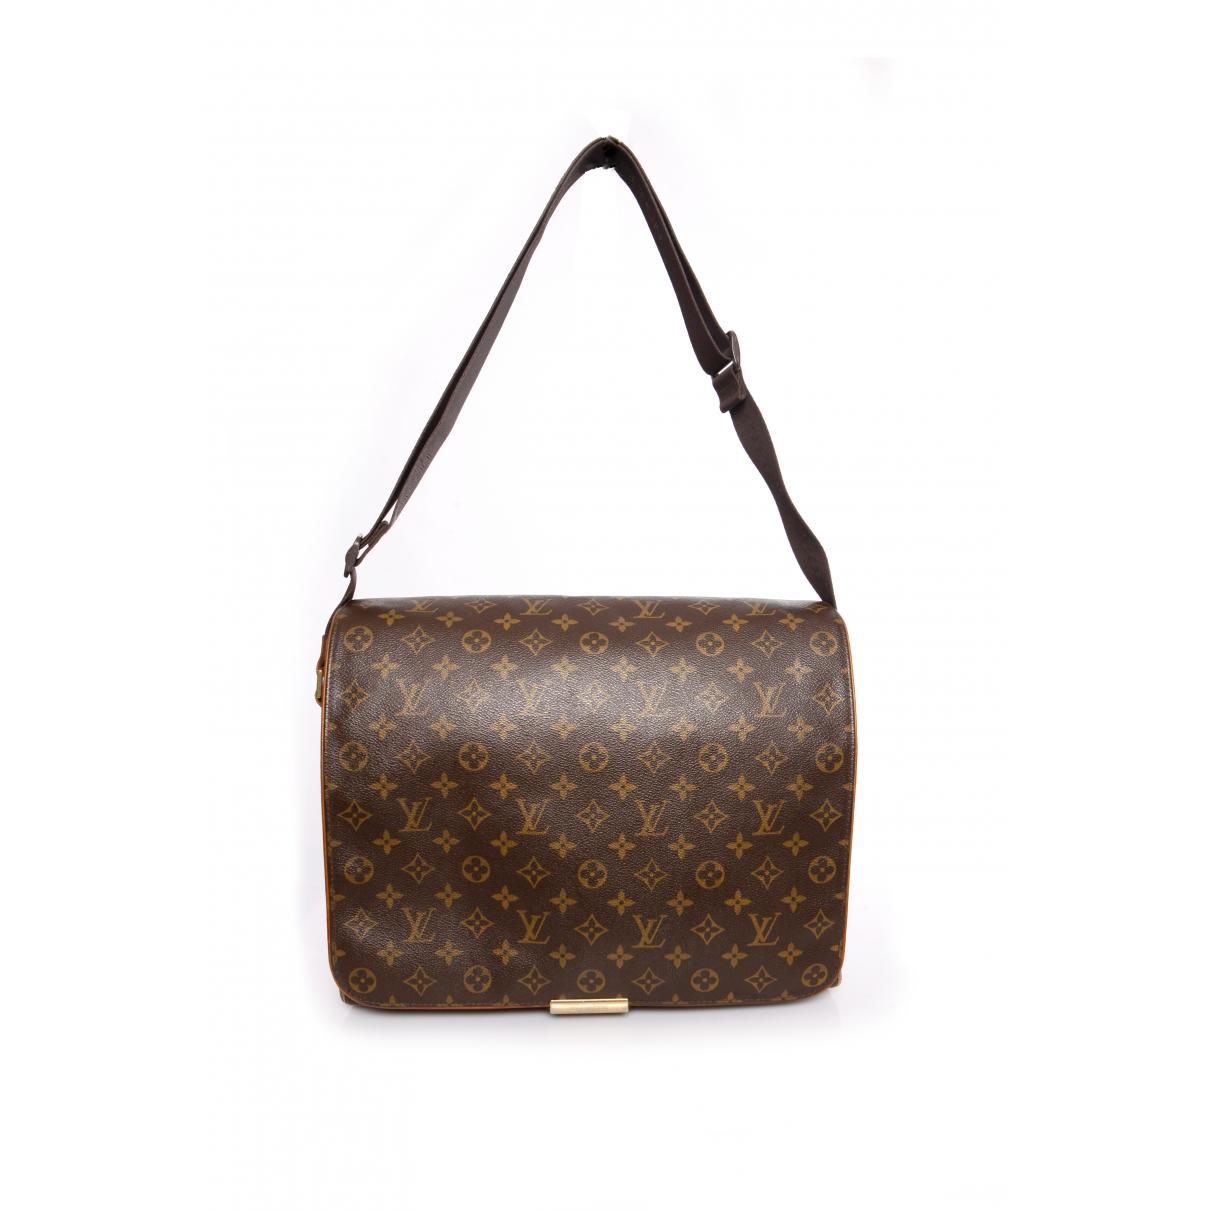 Lyst - Louis Vuitton Brown Cloth Travel Bag in Brown